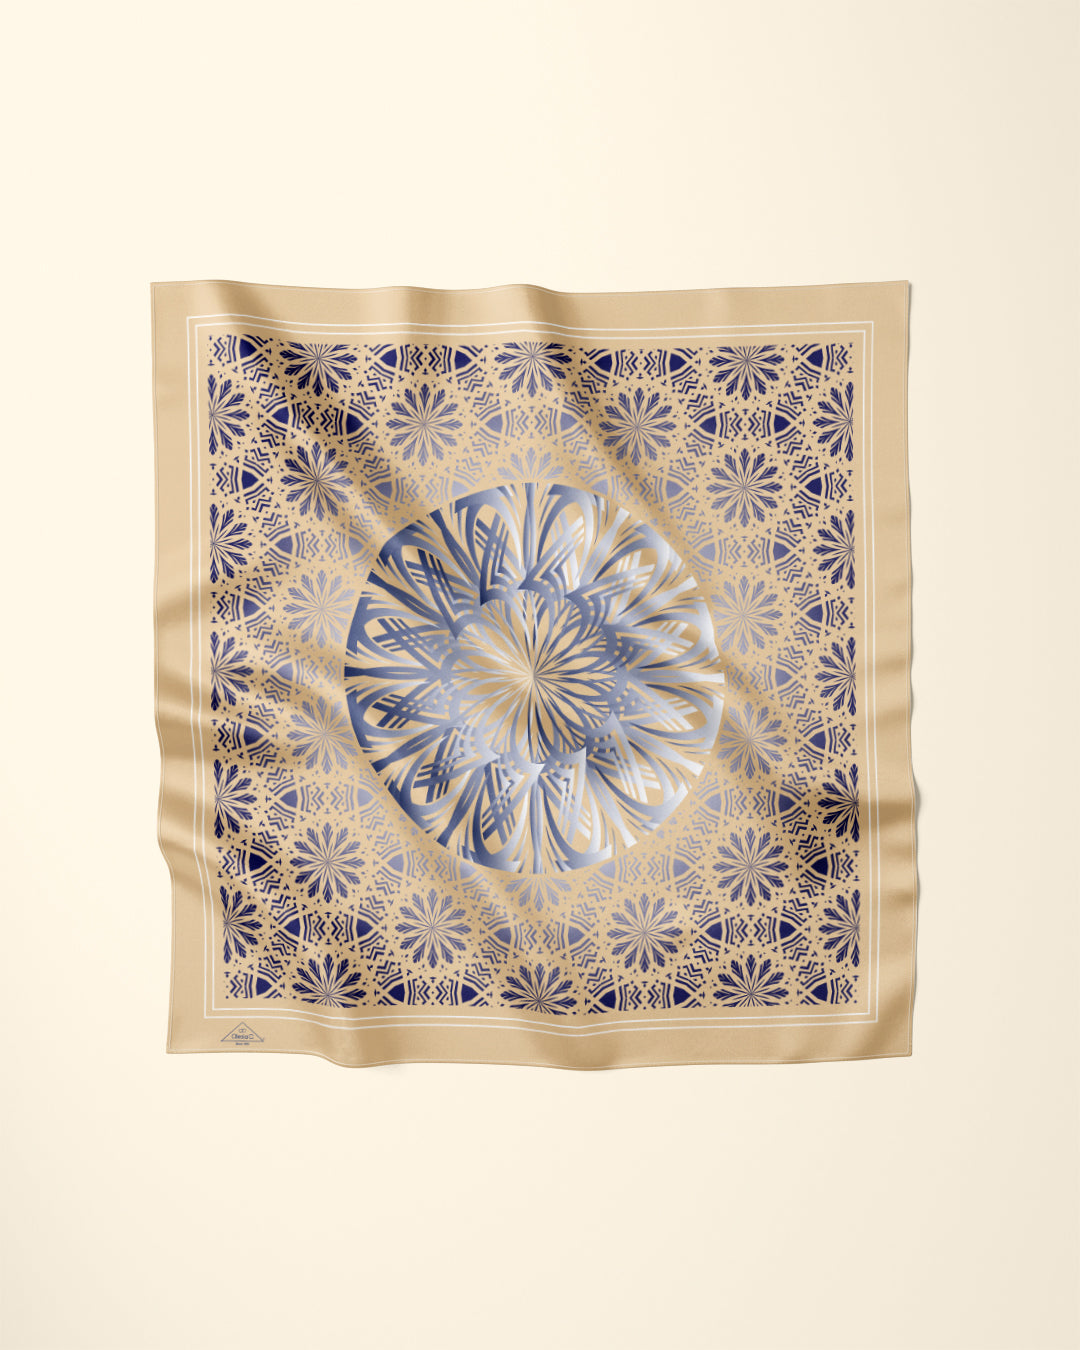 GLOWING Mandala Designer Silk Scarf Beige Navy Blue by Alesia Chaika